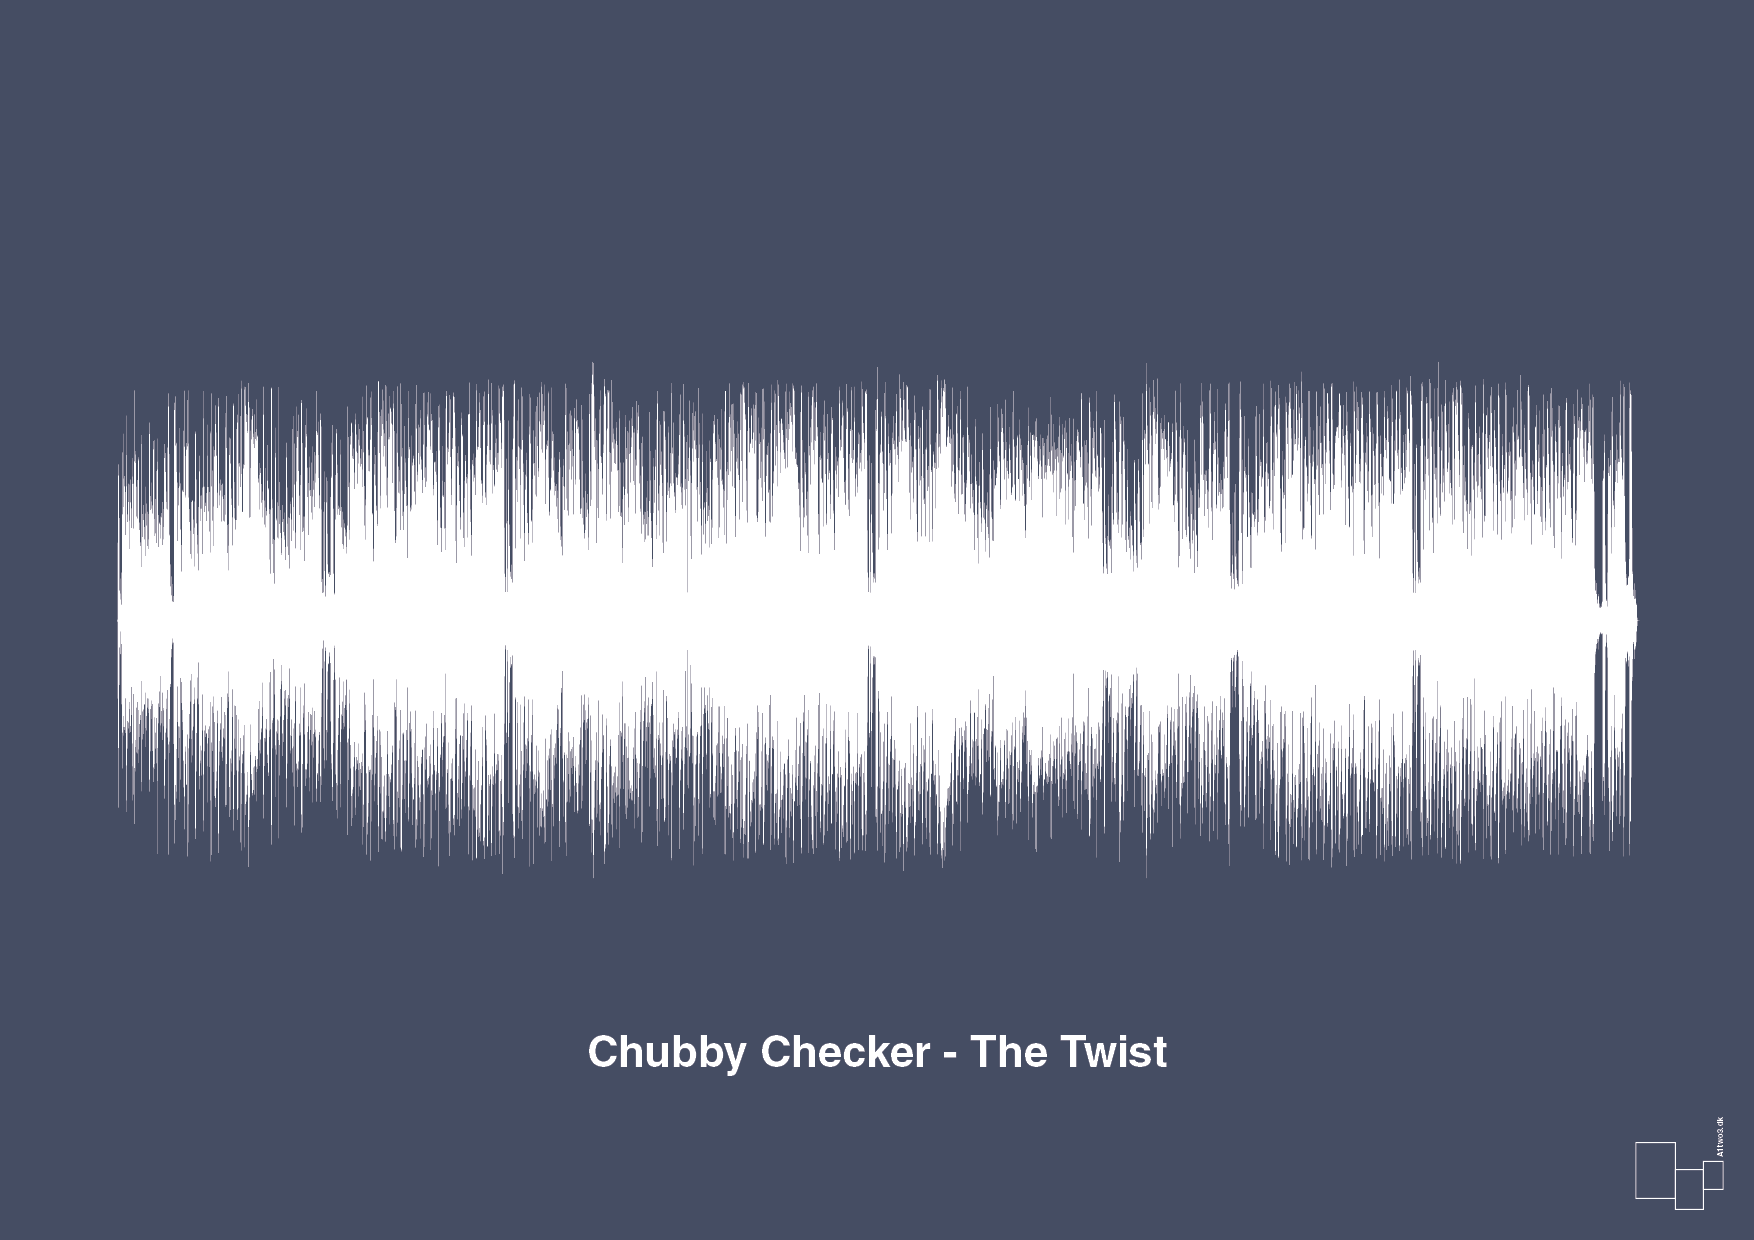 chubby checker - the twist - Plakat med Musik i Petrol